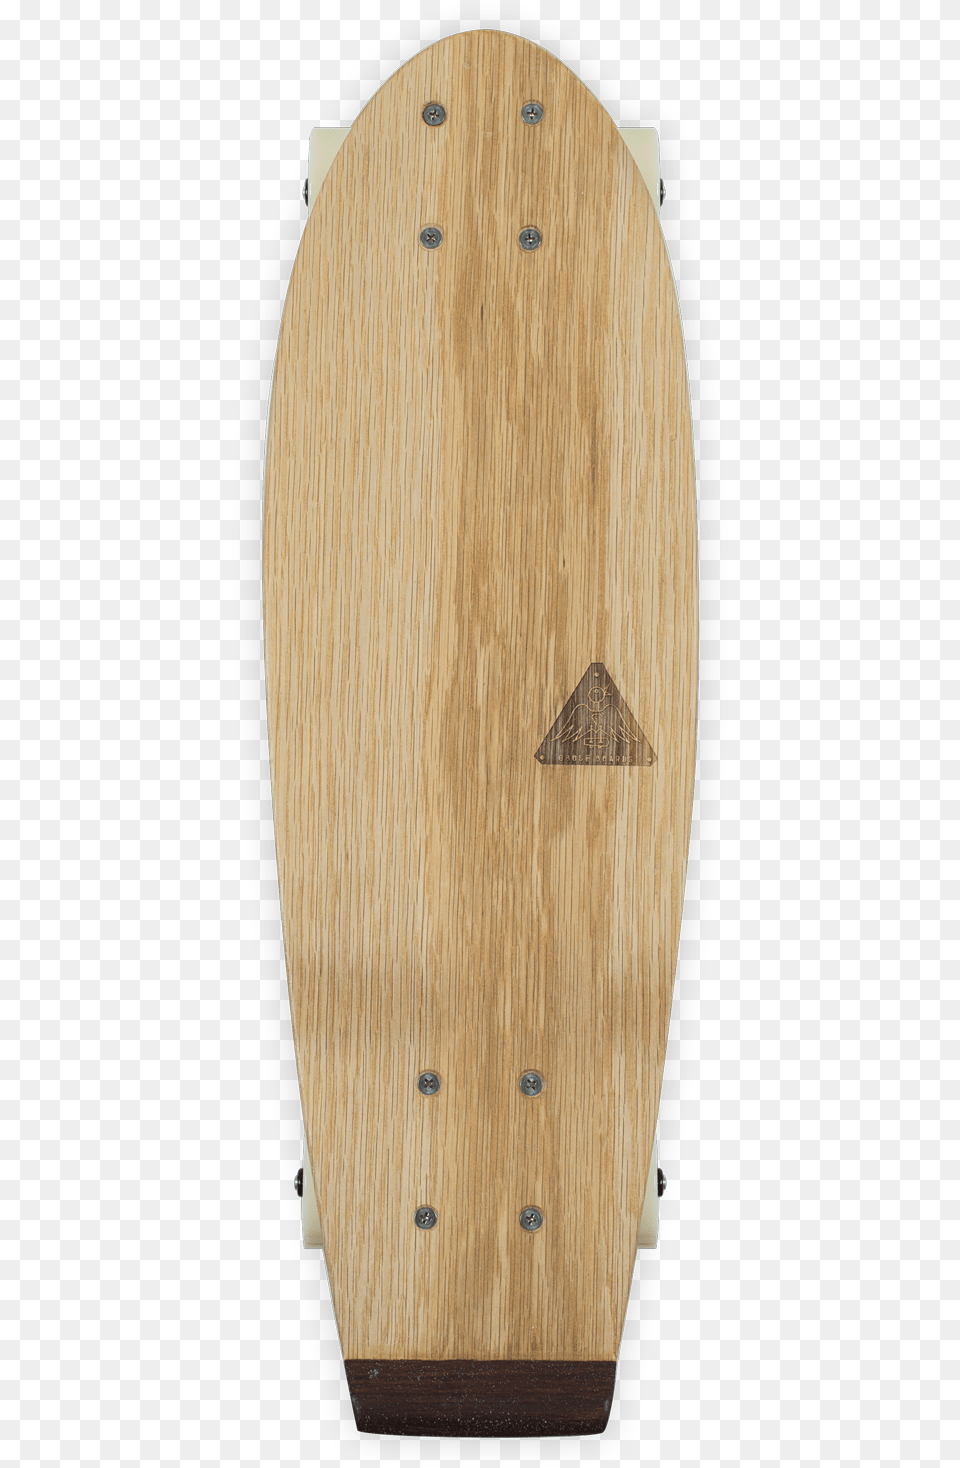 Goose Boards Lil Gosling 13 01 Plywood, Wood, Skateboard Free Png Download